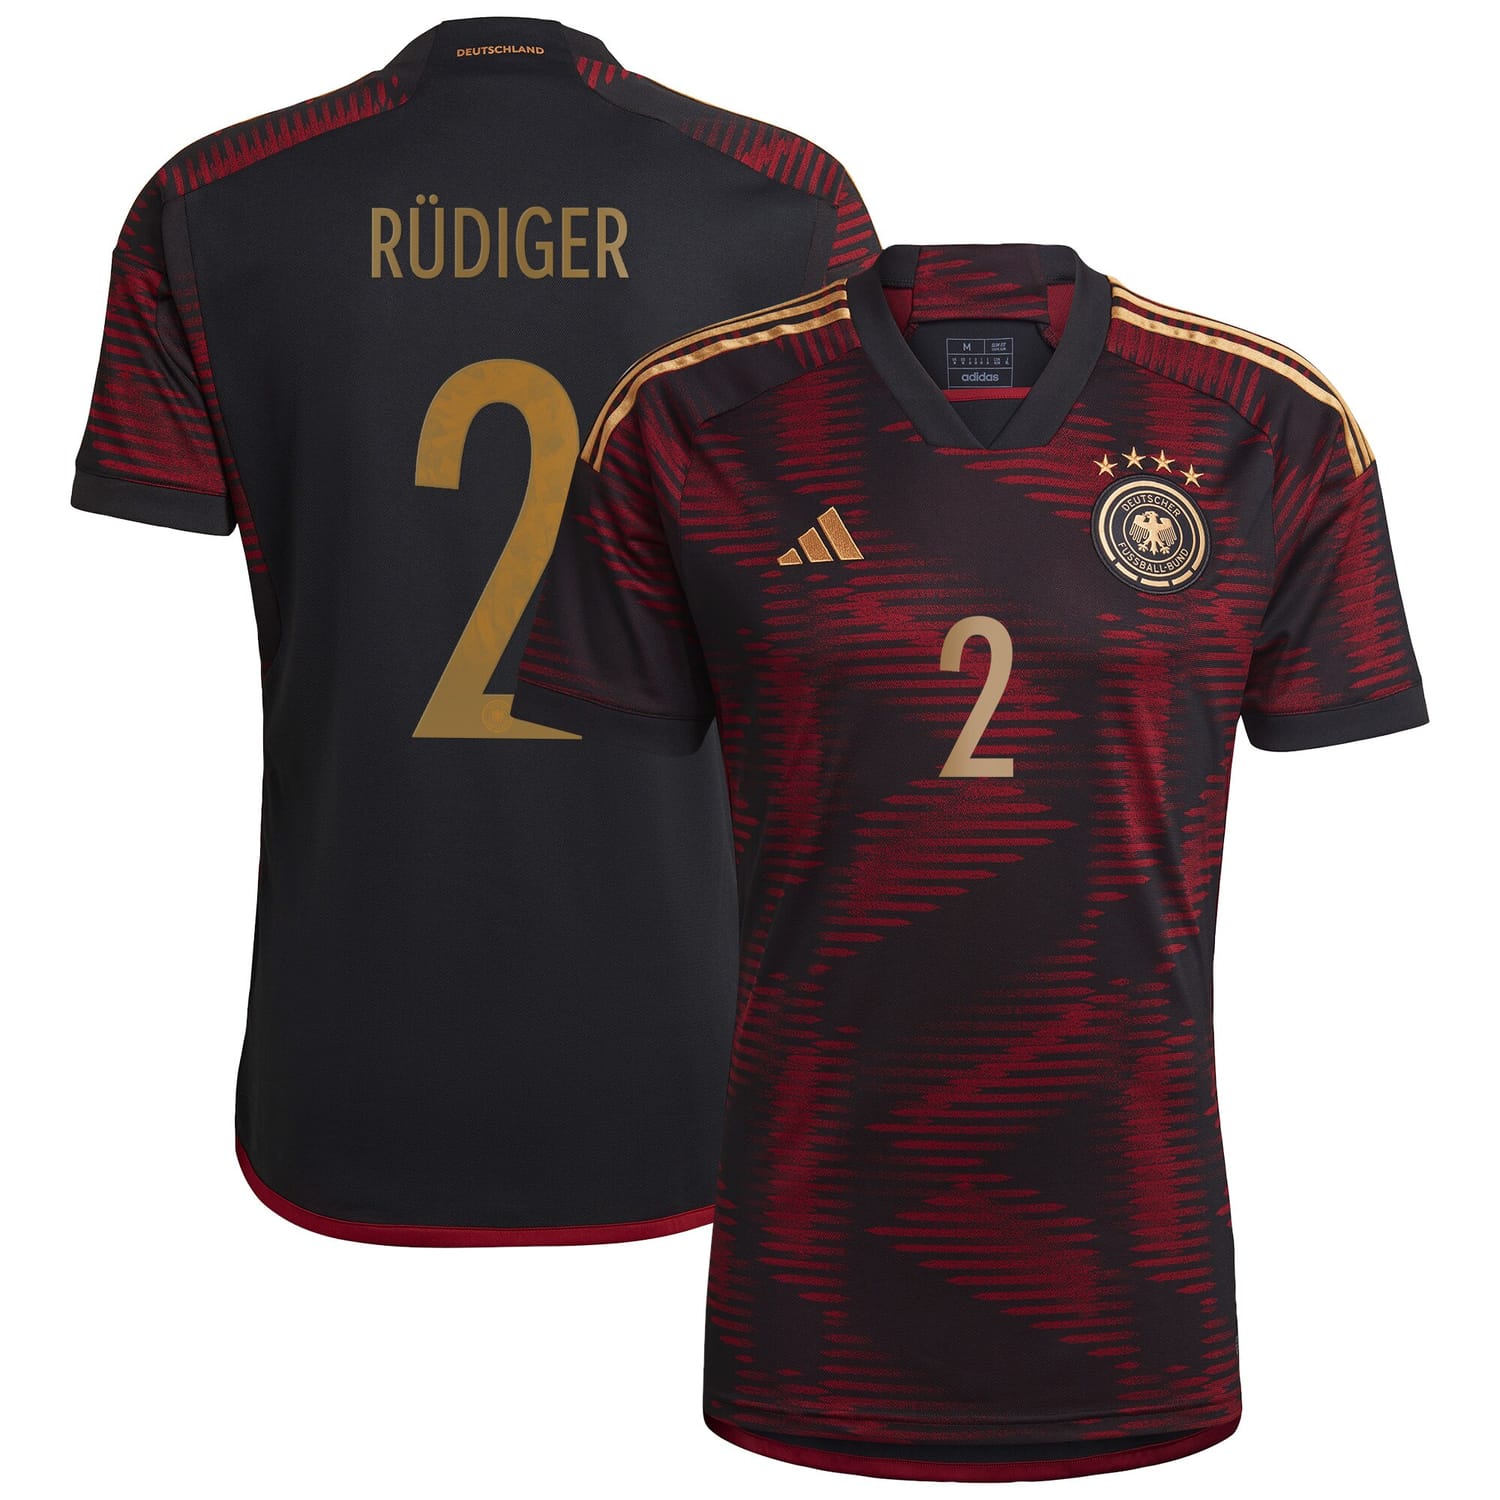 Germany National Team Away Jersey Shirt player Antonio Rüdiger 2 printing for Men